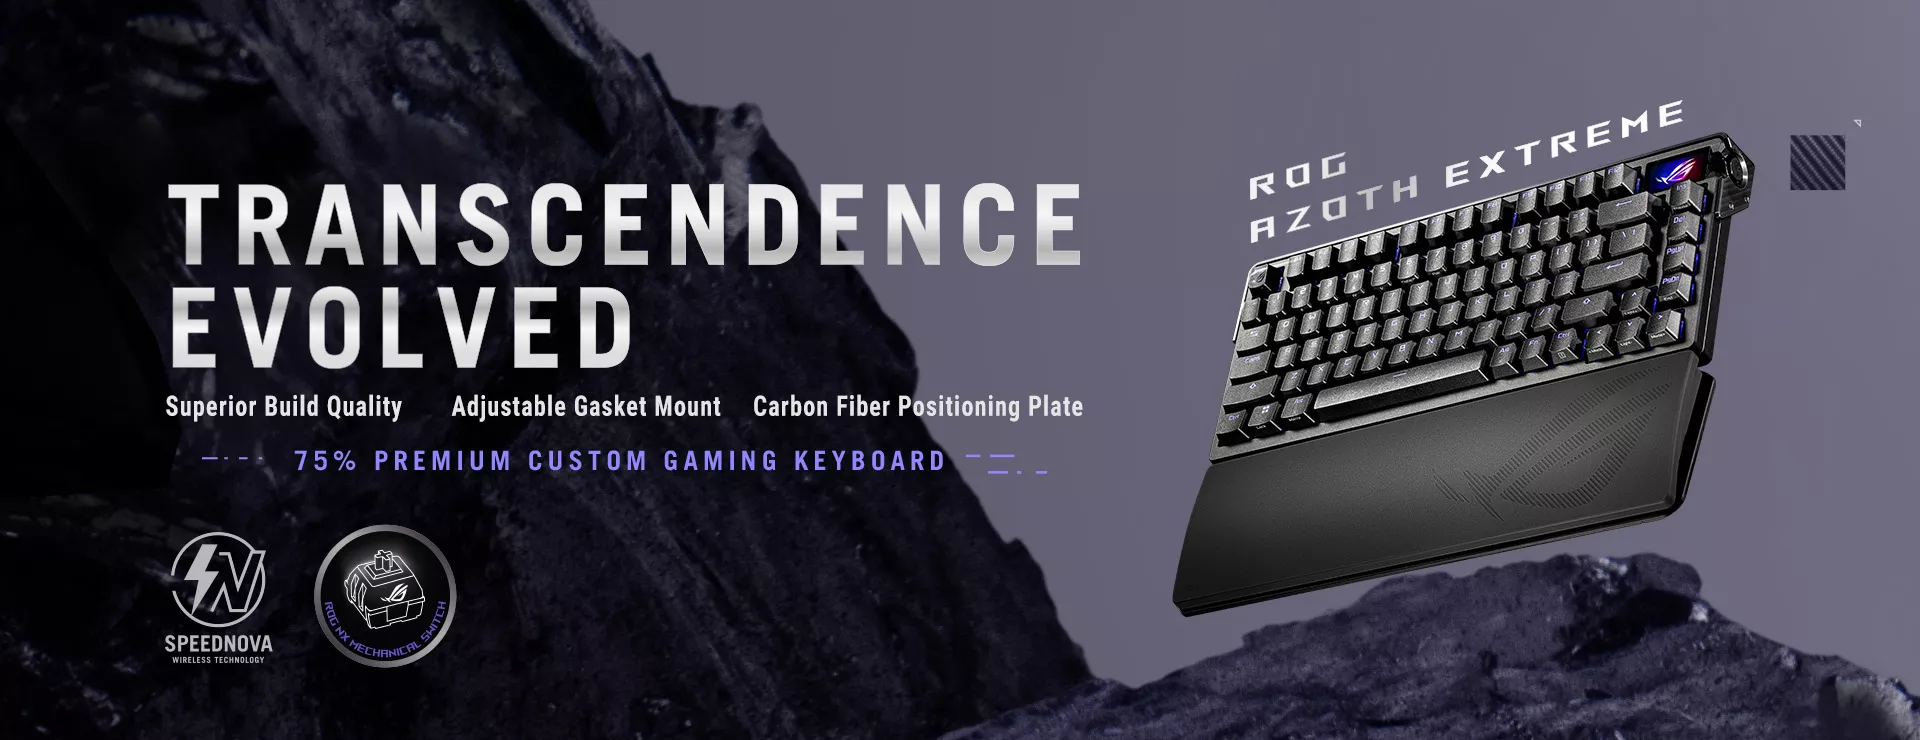 ROG Azoth Extreme premium custom gaming keyboard key visual